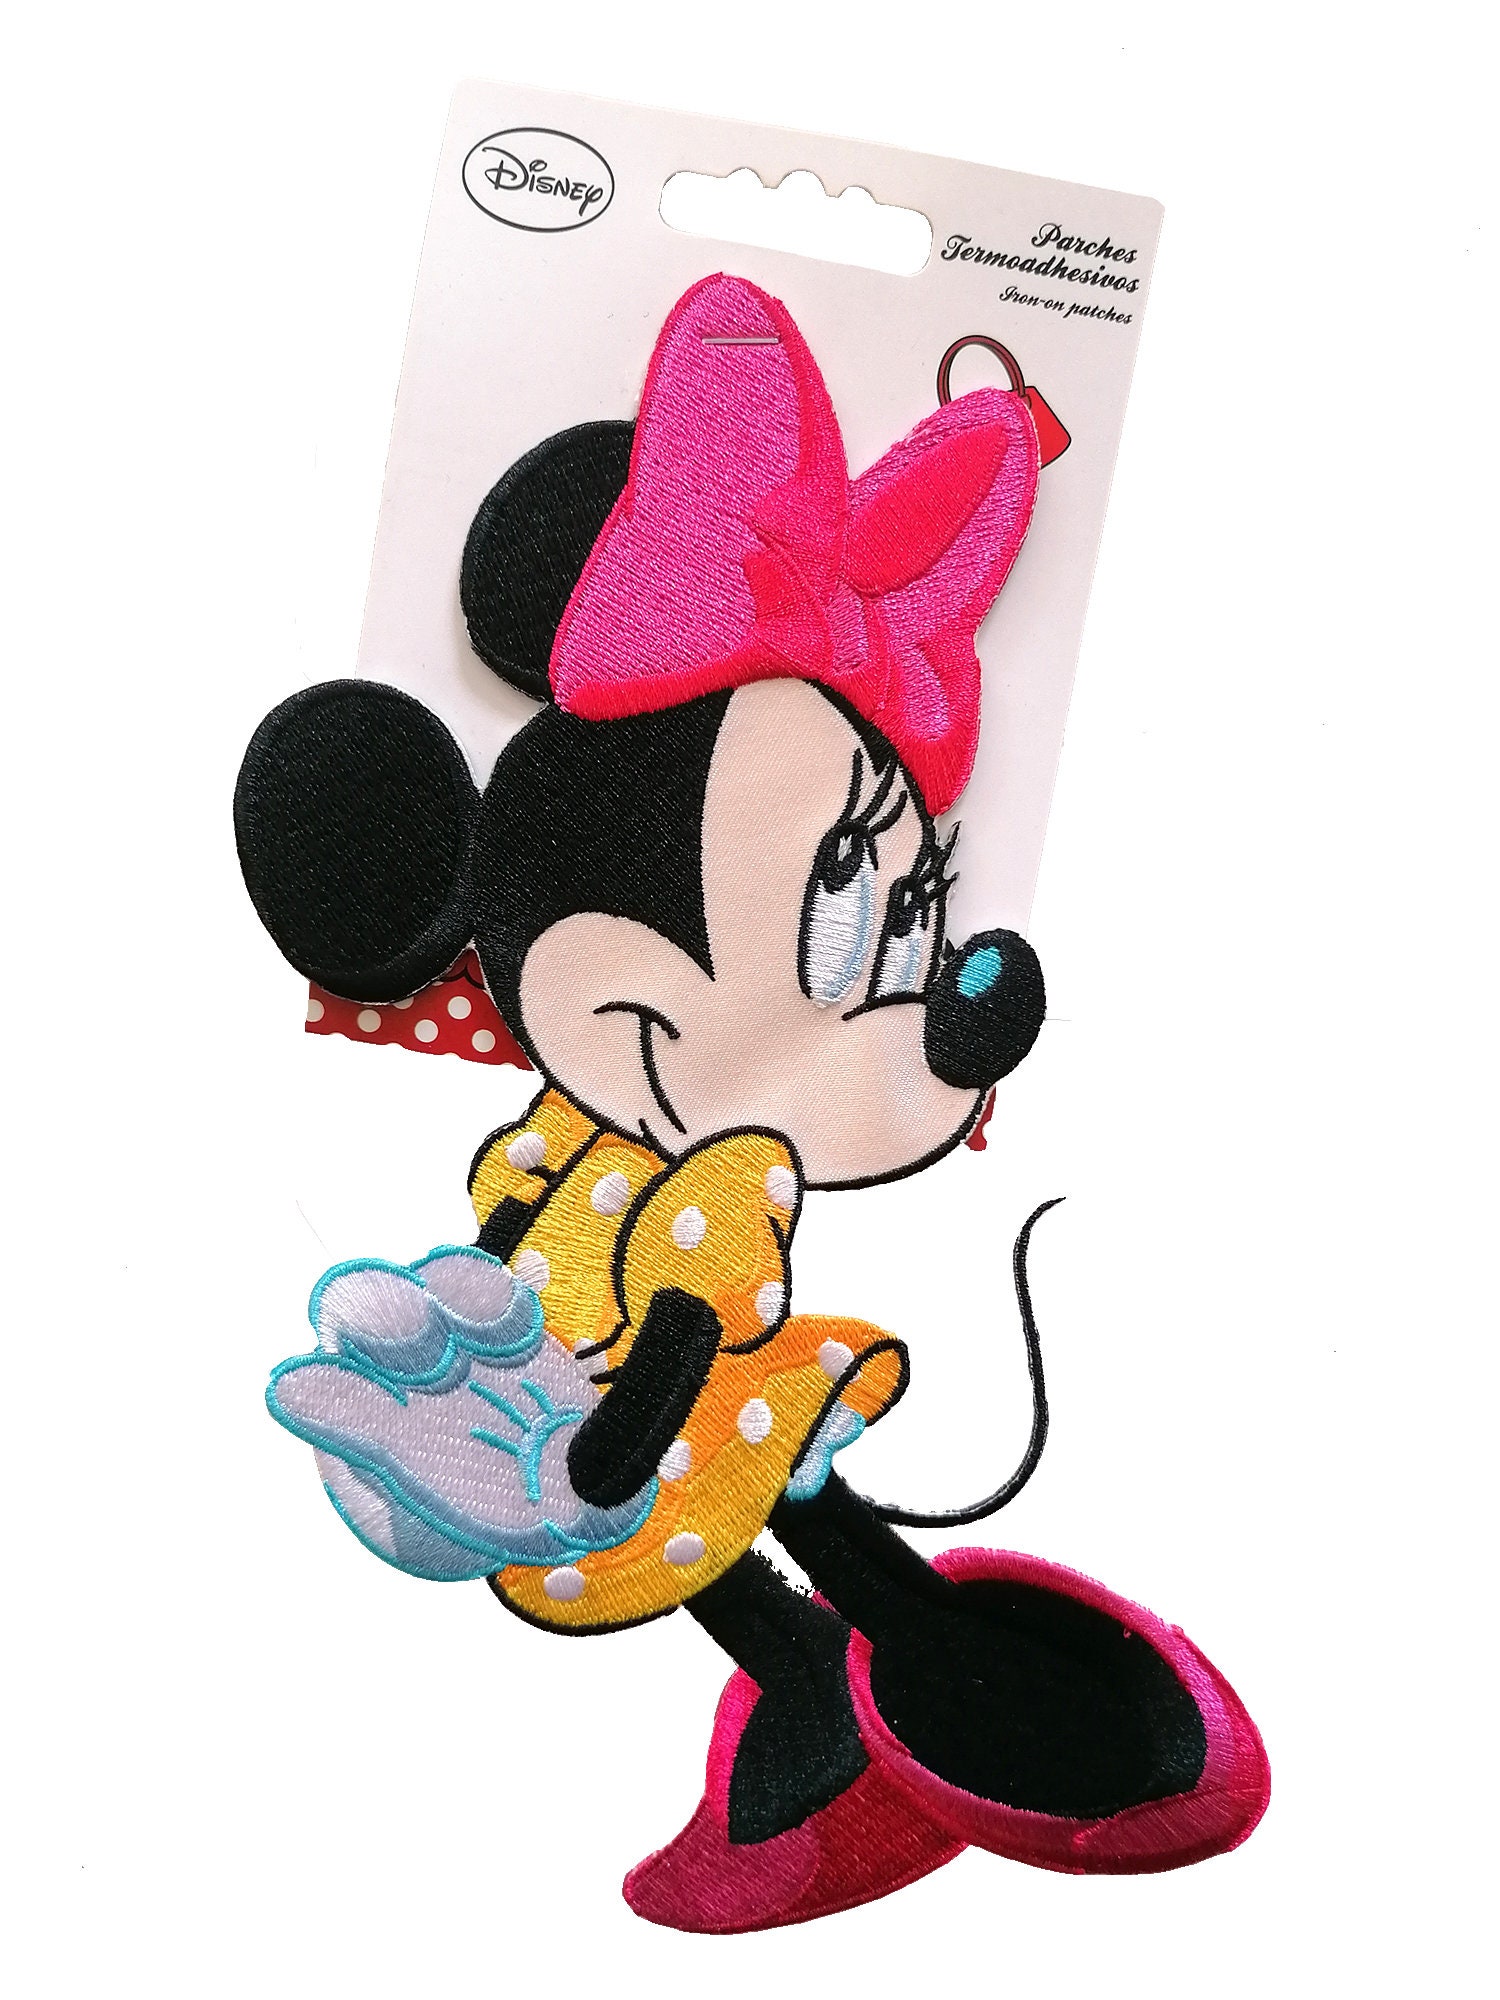 Disney Minnie Mouse Large Patch